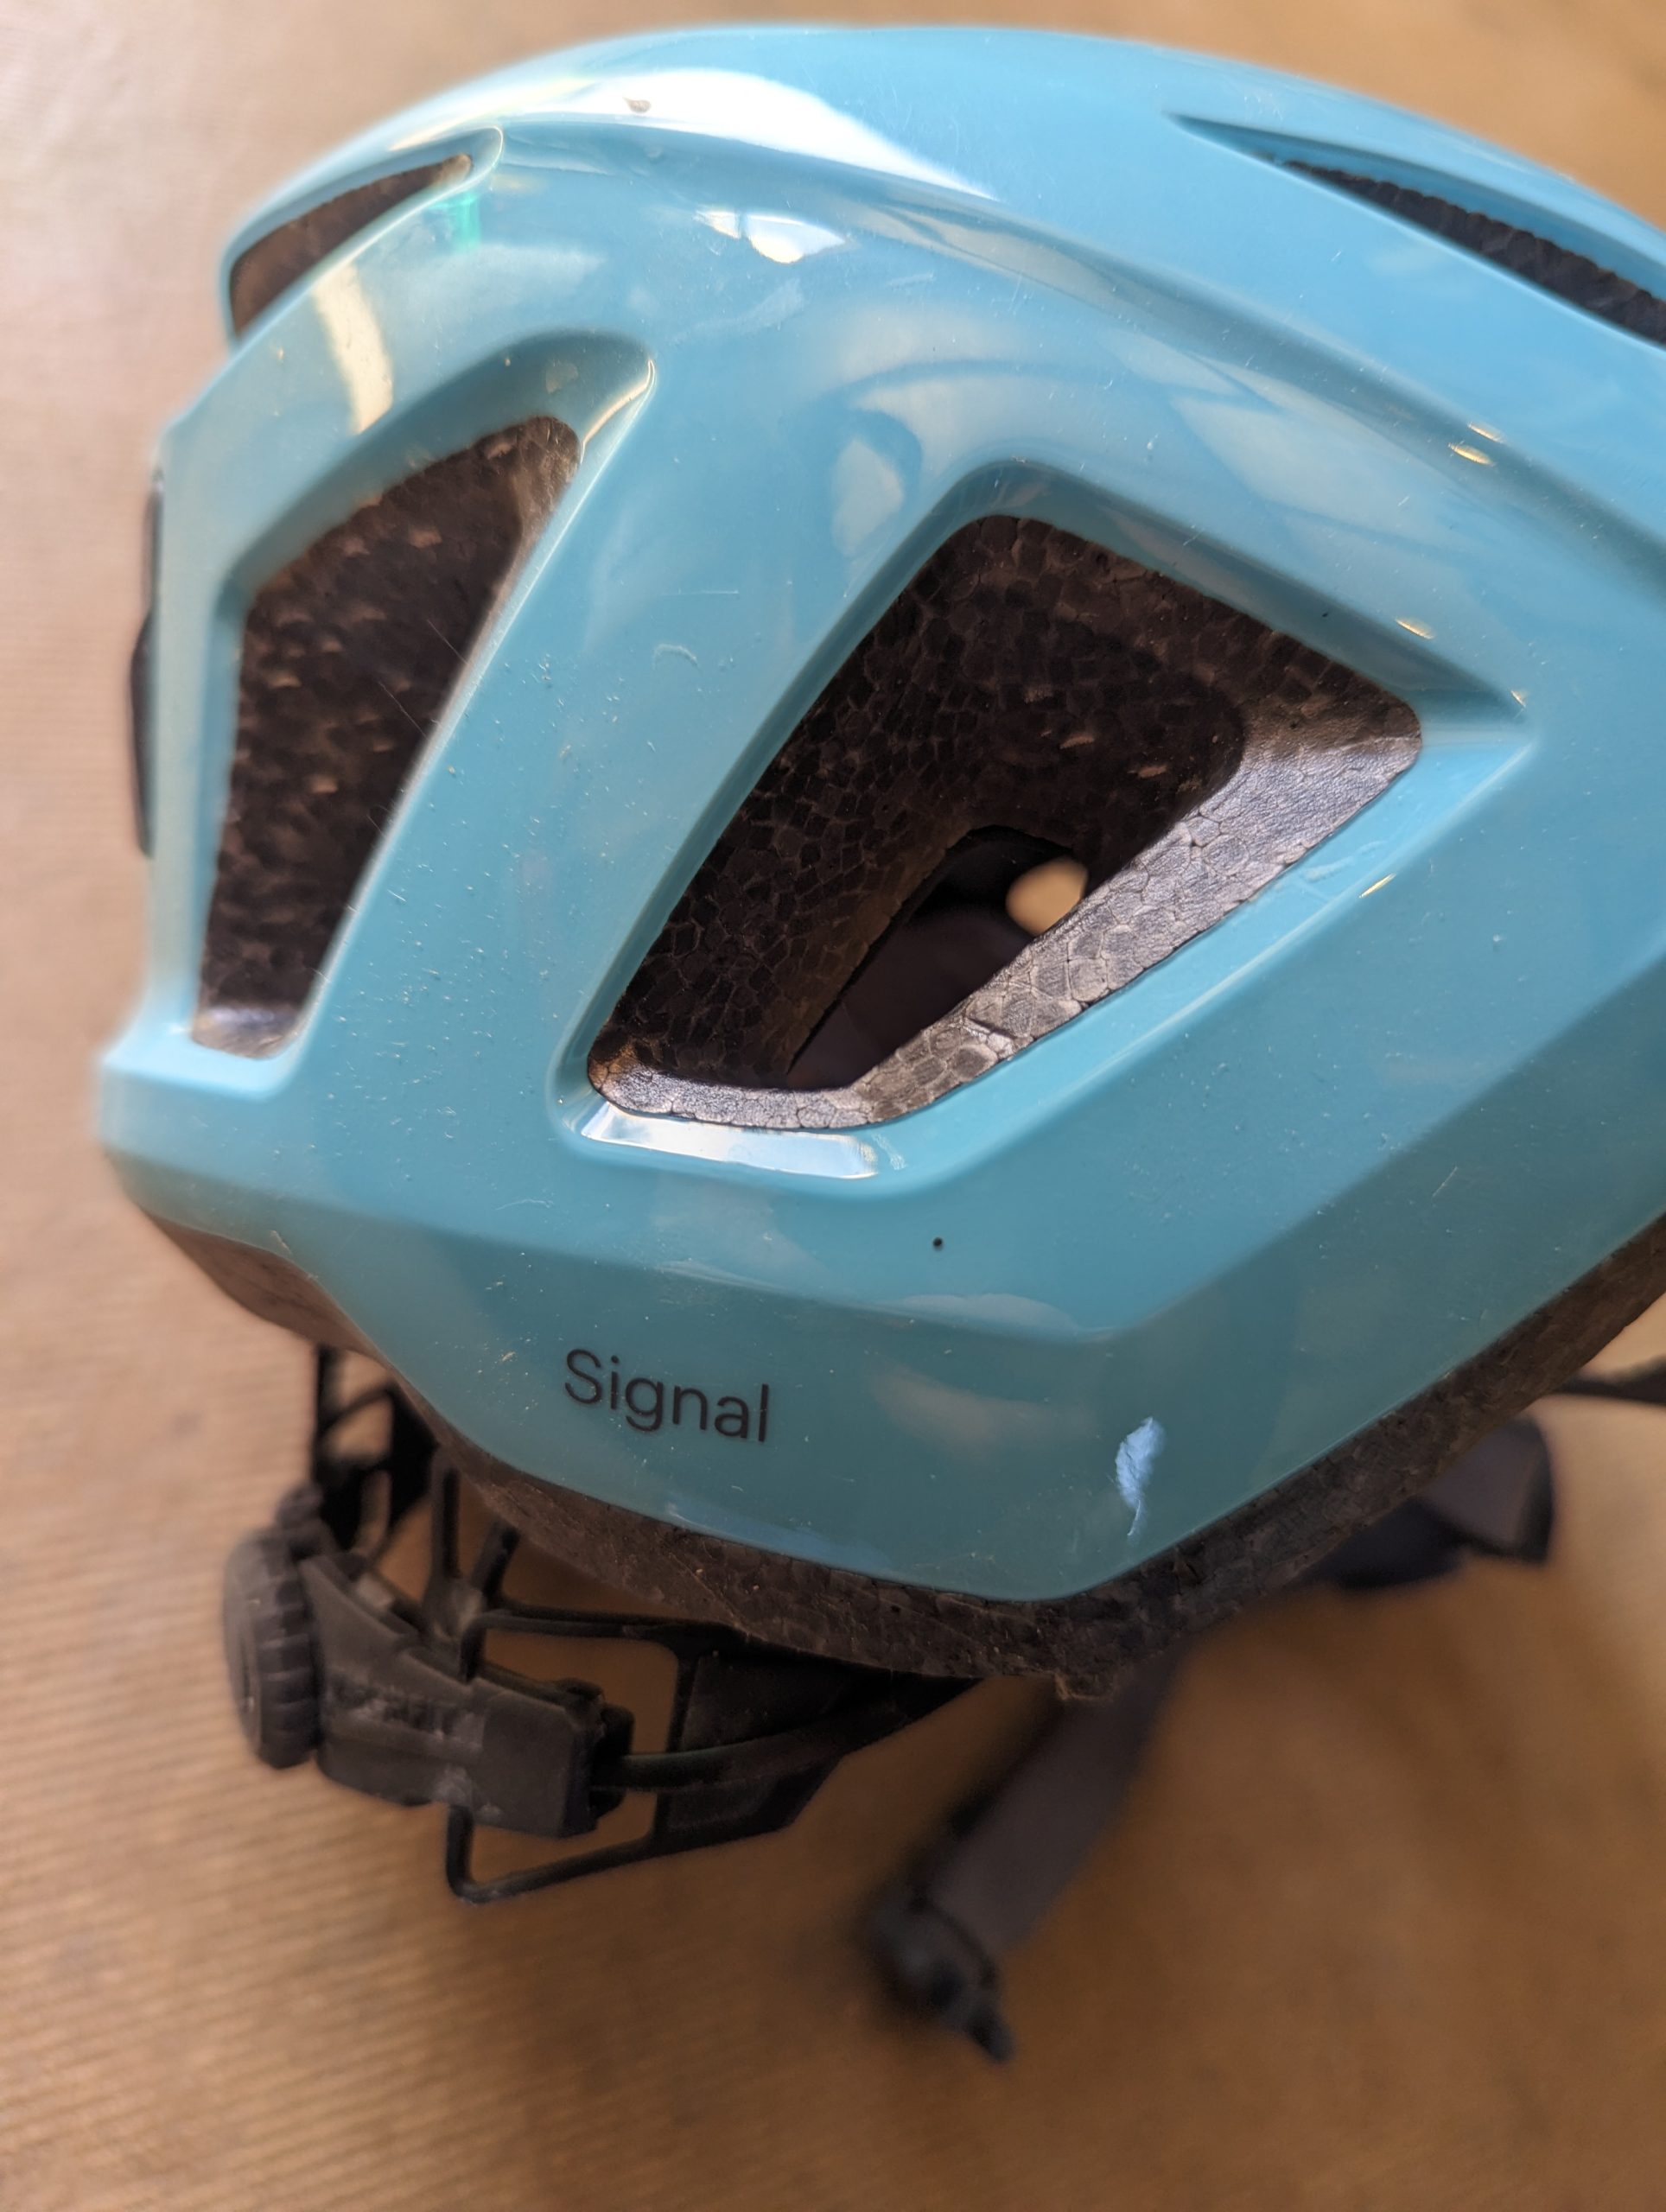 Smith Signal MIPS Helmet Small